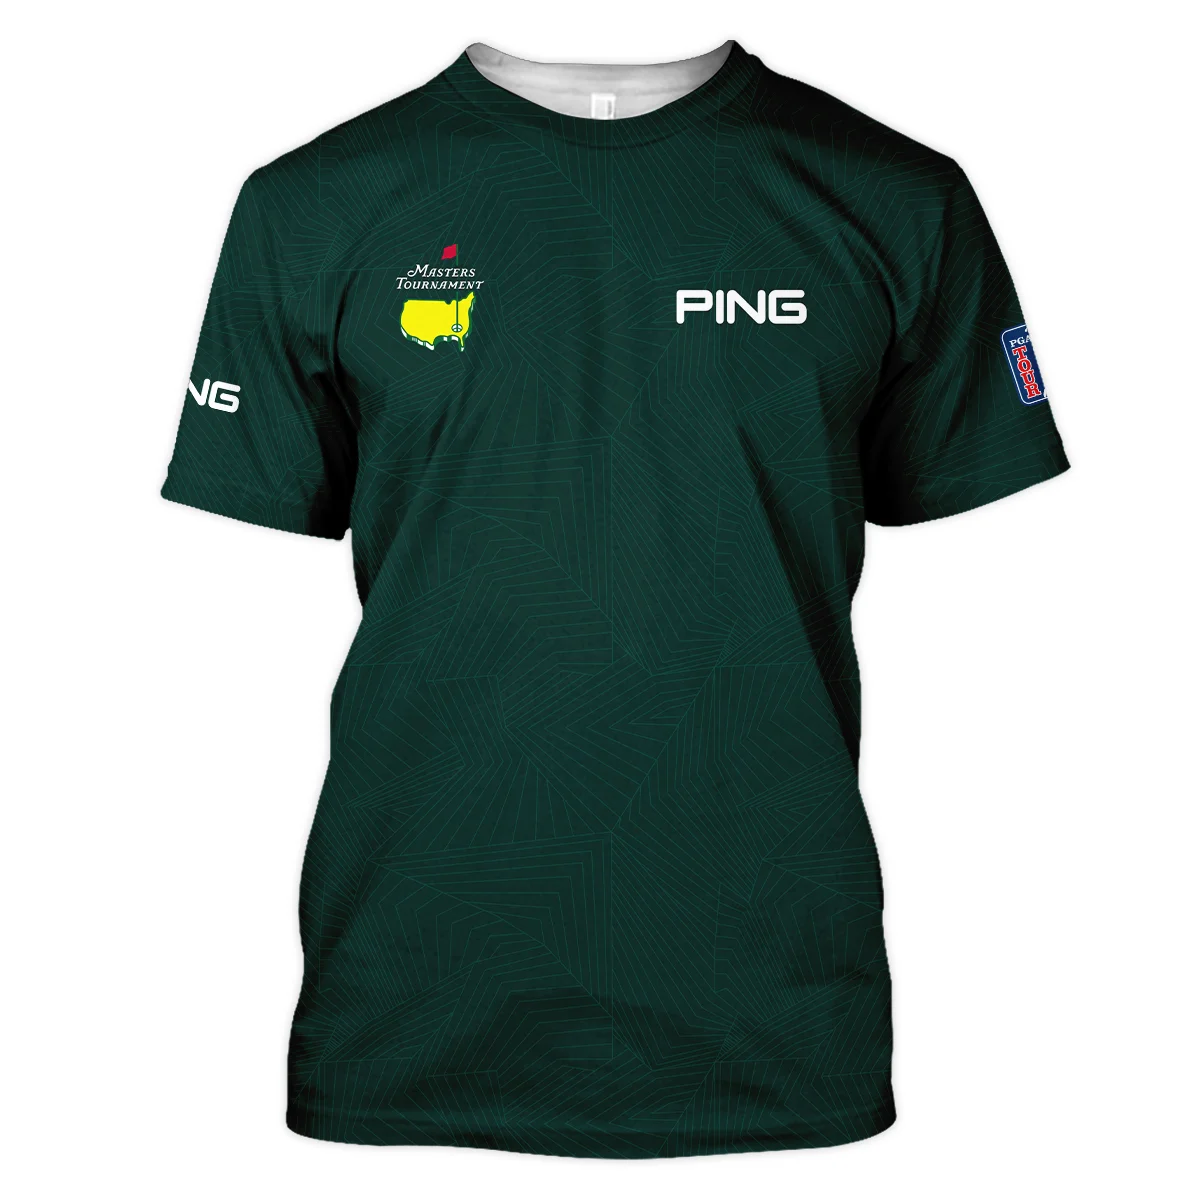 Masters Tournament Ping Pattern Sport Jersey Dark Green Unisex T-Shirt Style Classic T-Shirt